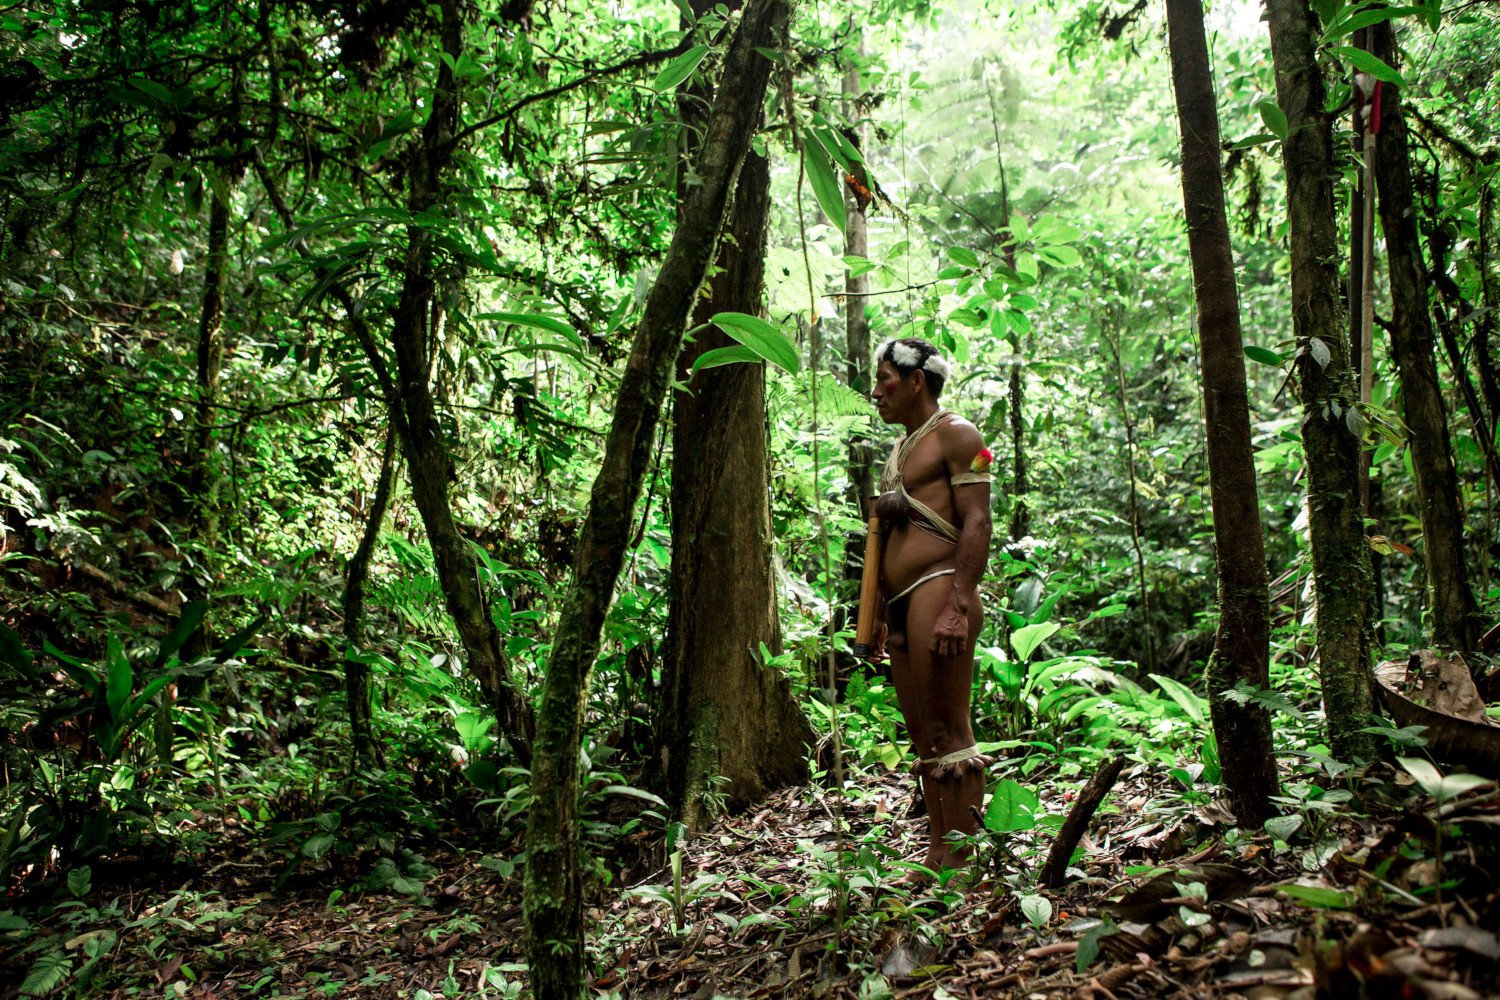 Waorani ancestral territory in the Pastaza region of Ecuadorian Amazon.